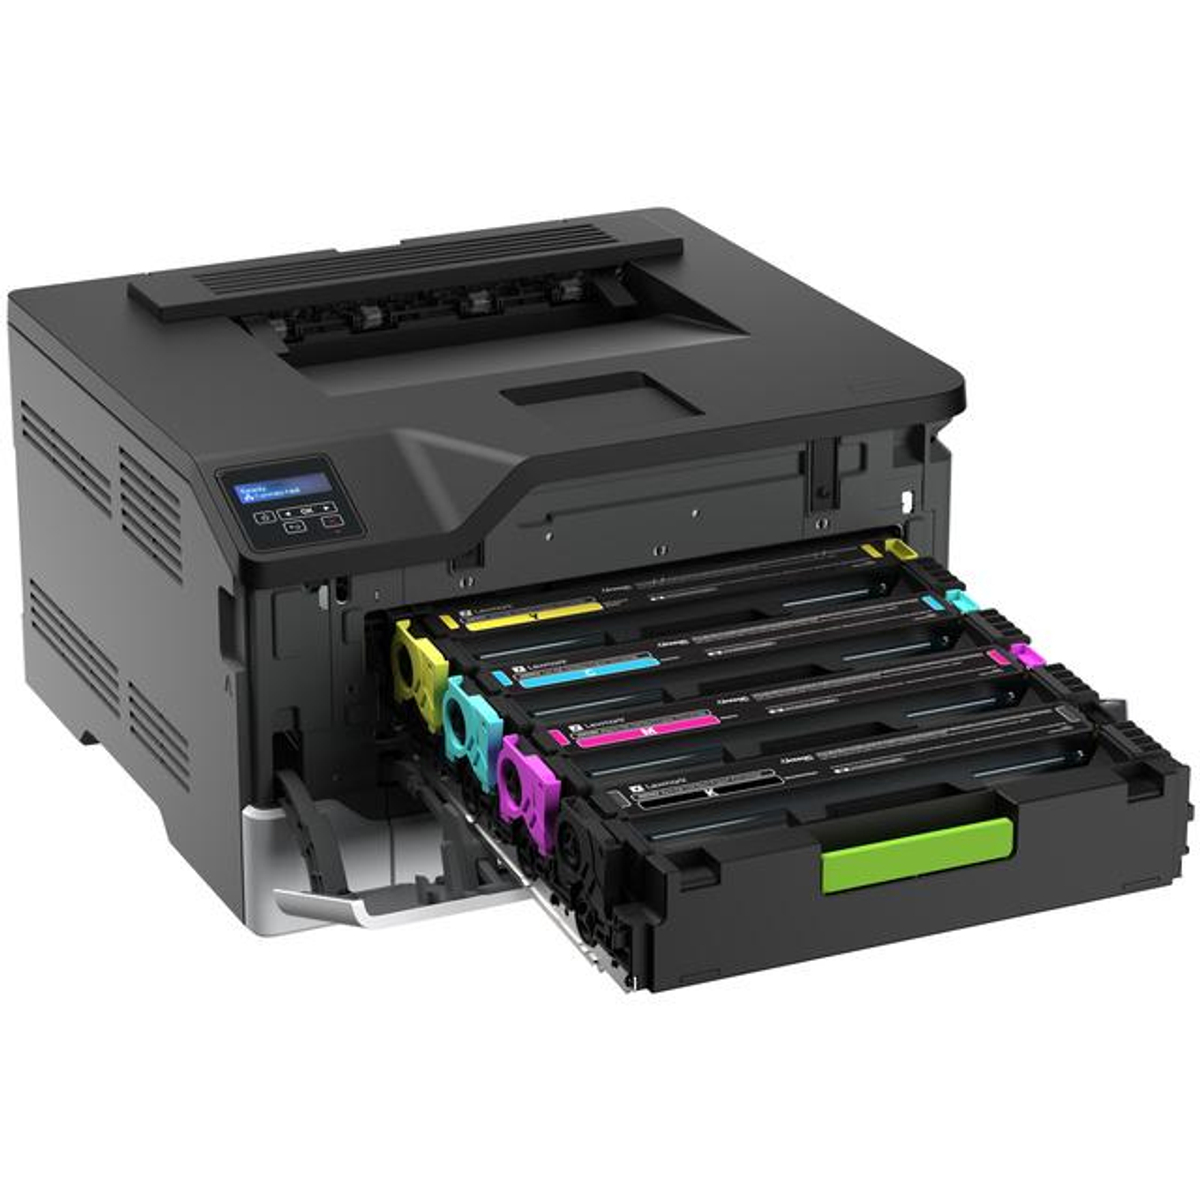 CS331dw A4 Colour Laser Printer